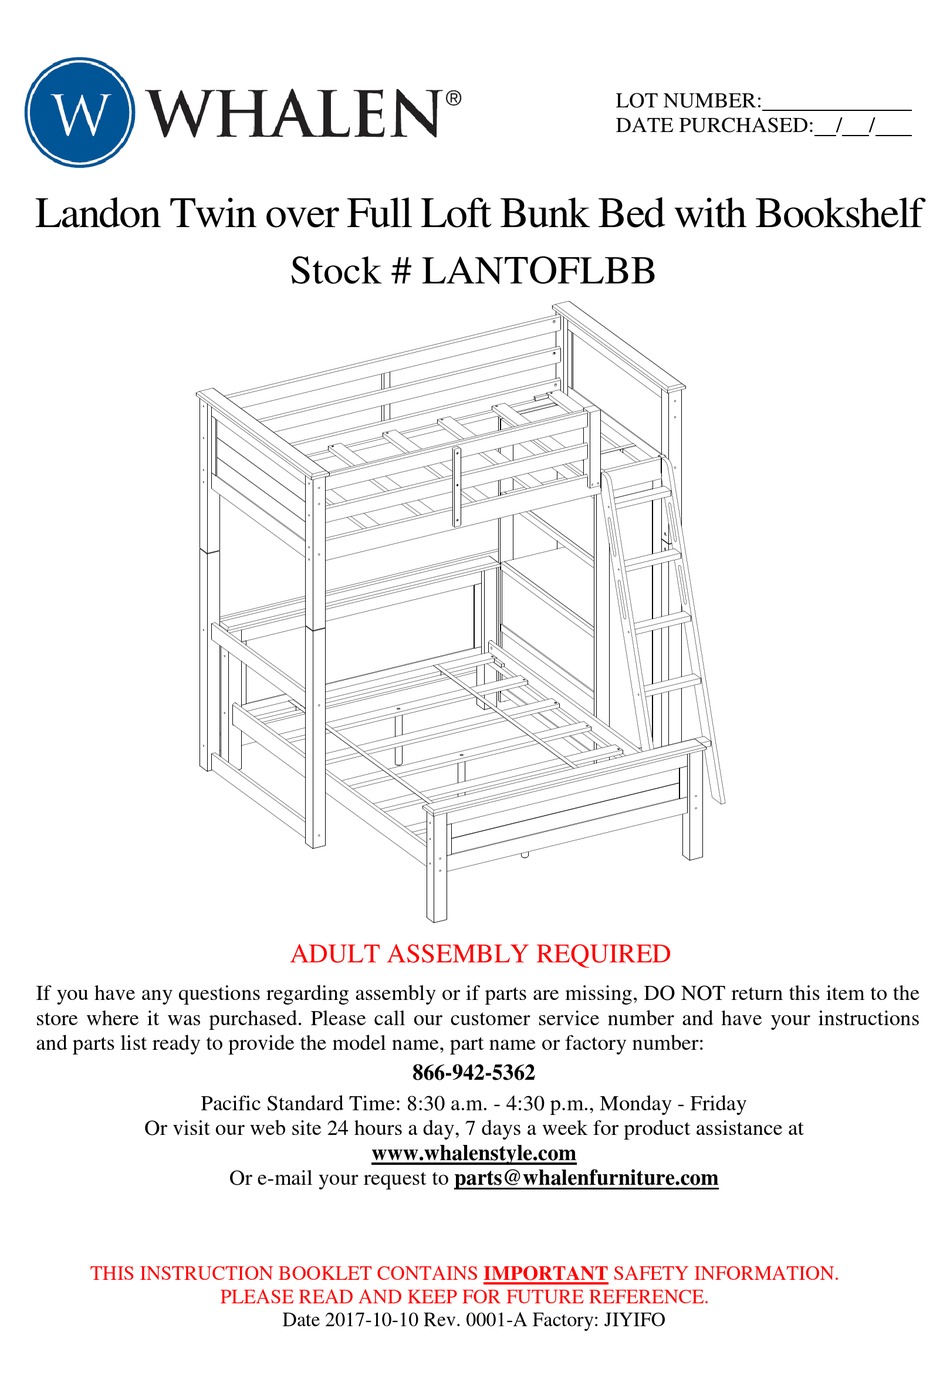 Whalen Lantoflbb Assembly Instructions, Bunk Bed Assembly Instructions